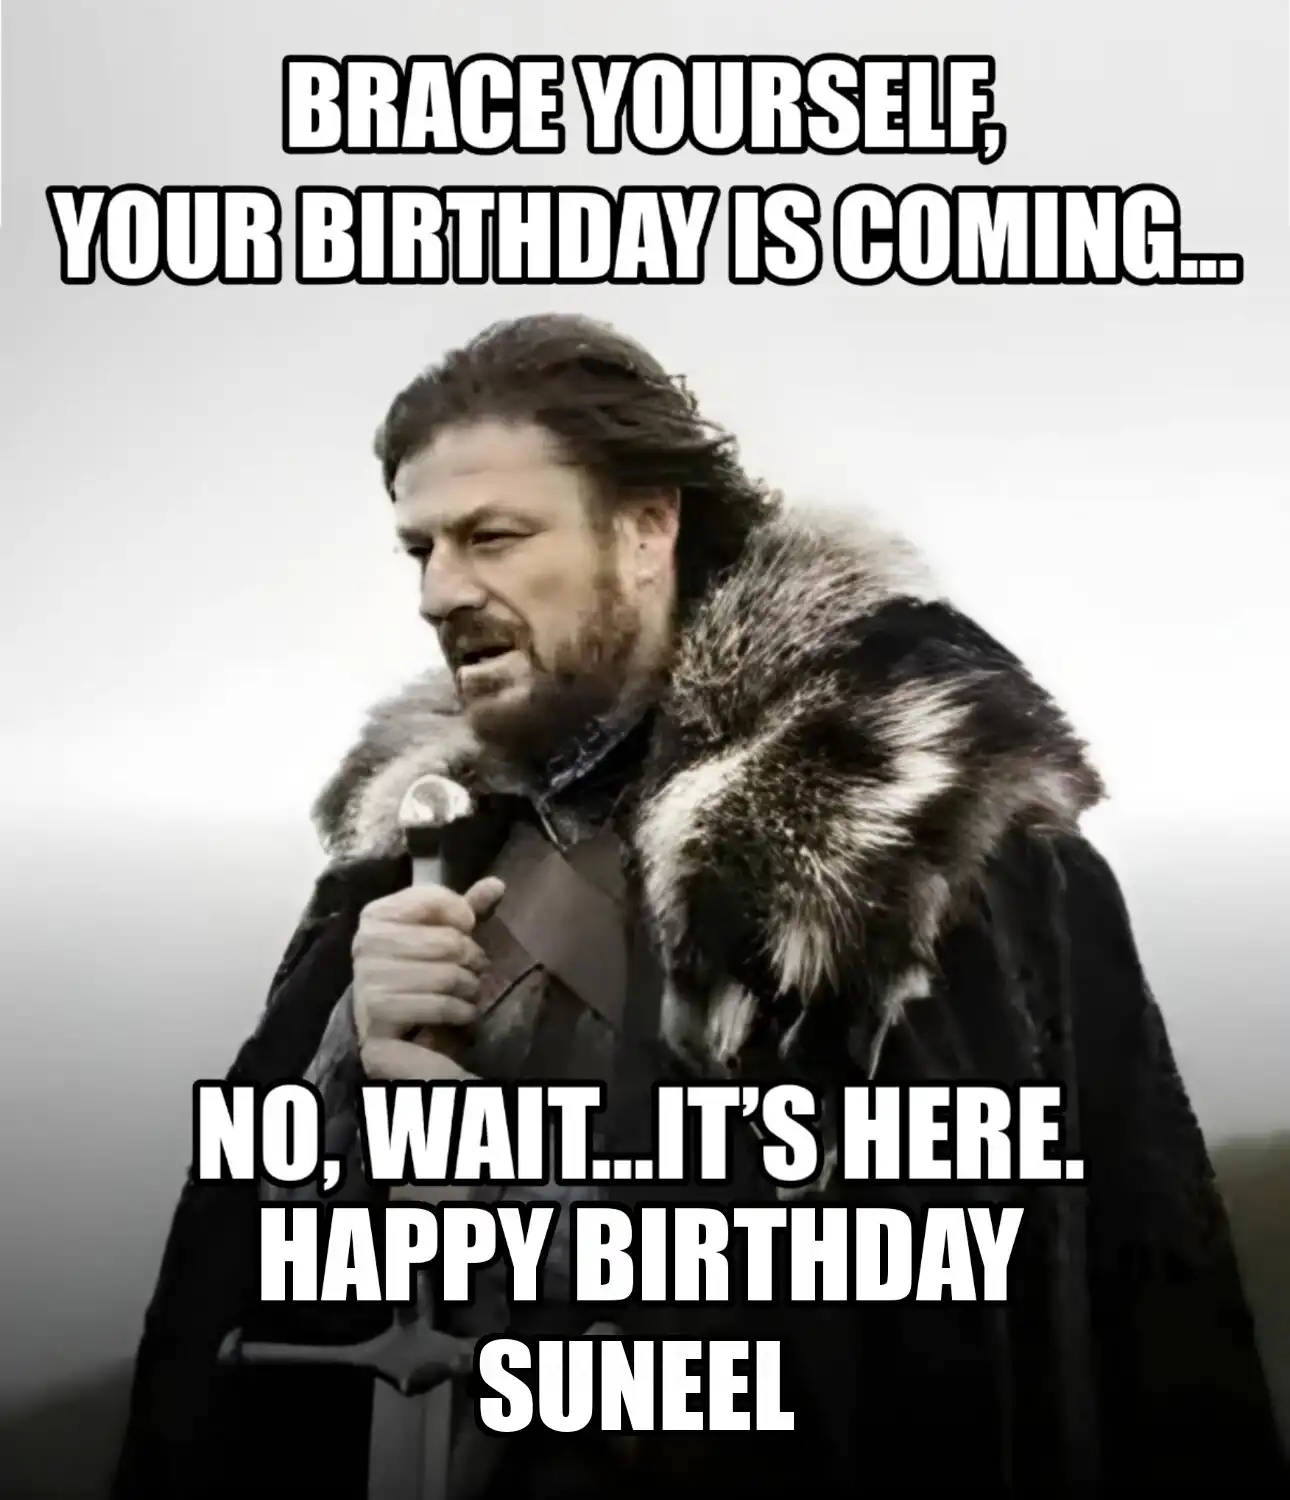 Happy Birthday Suneel Brace Yourself Your Birthday Is Coming Meme